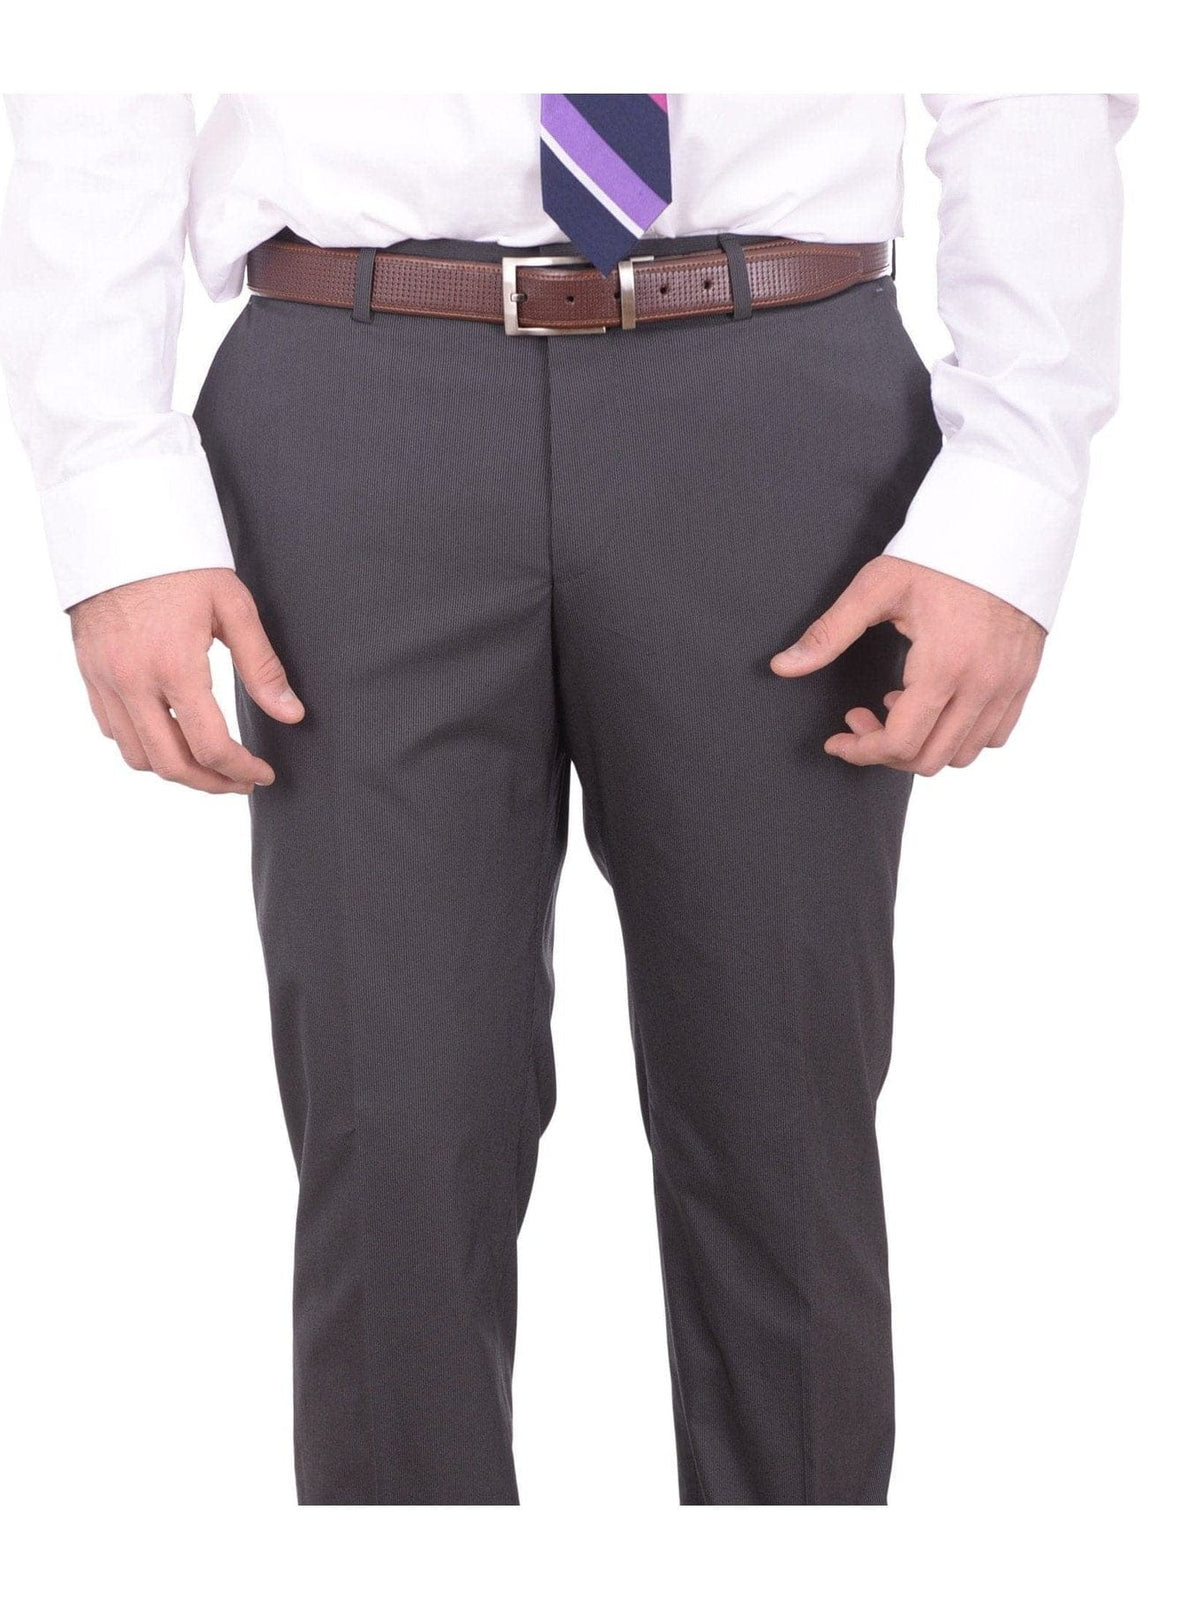 HUGO BOSS TWO PIECE SUITS Hugo Boss Hutson1/gander Slim Fit Gray Mini Striped Stretch Cotton Blend Suit